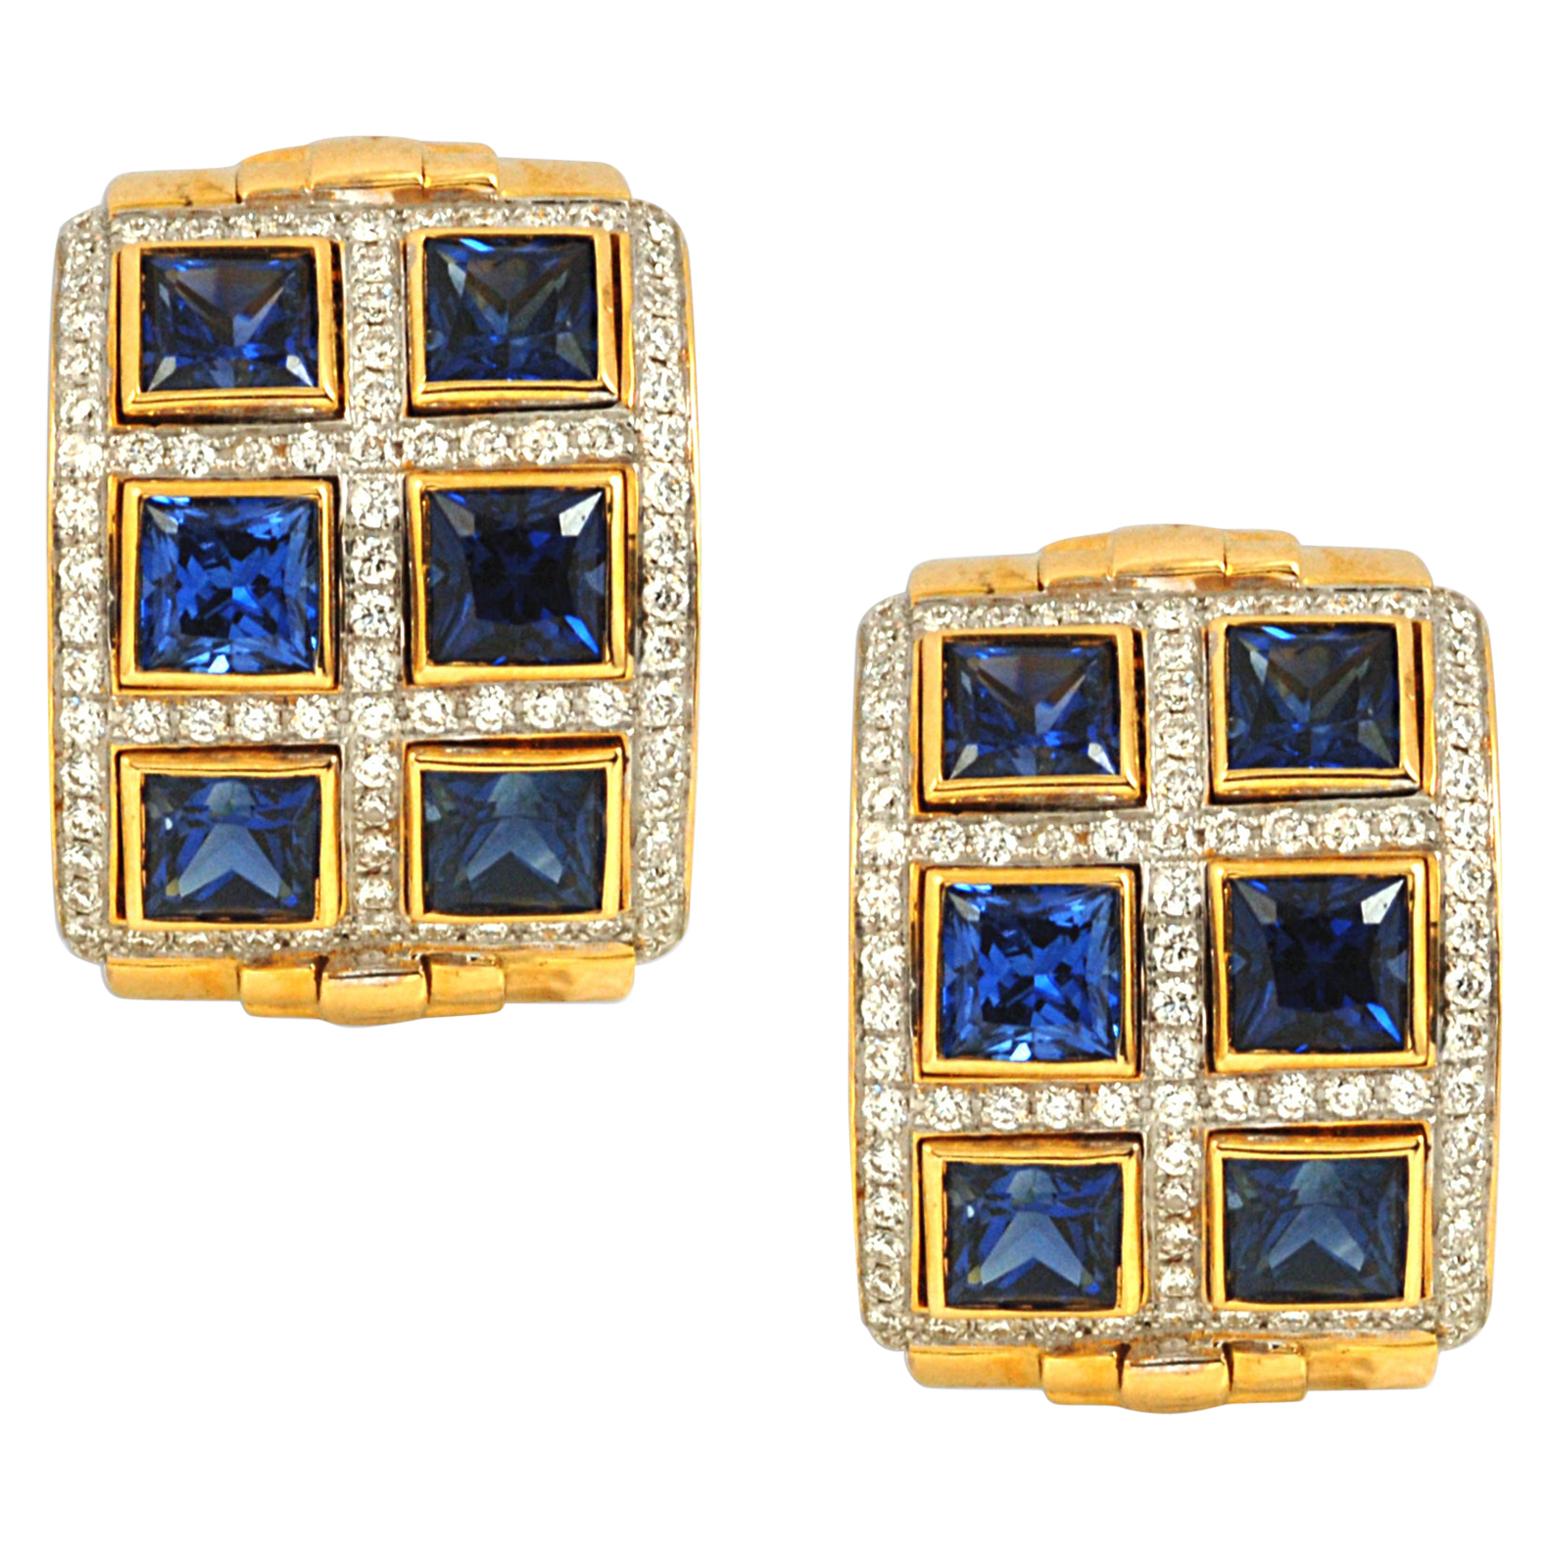 Blue Sapphire with Diamond Earrings in 18 Karat Gold Settings